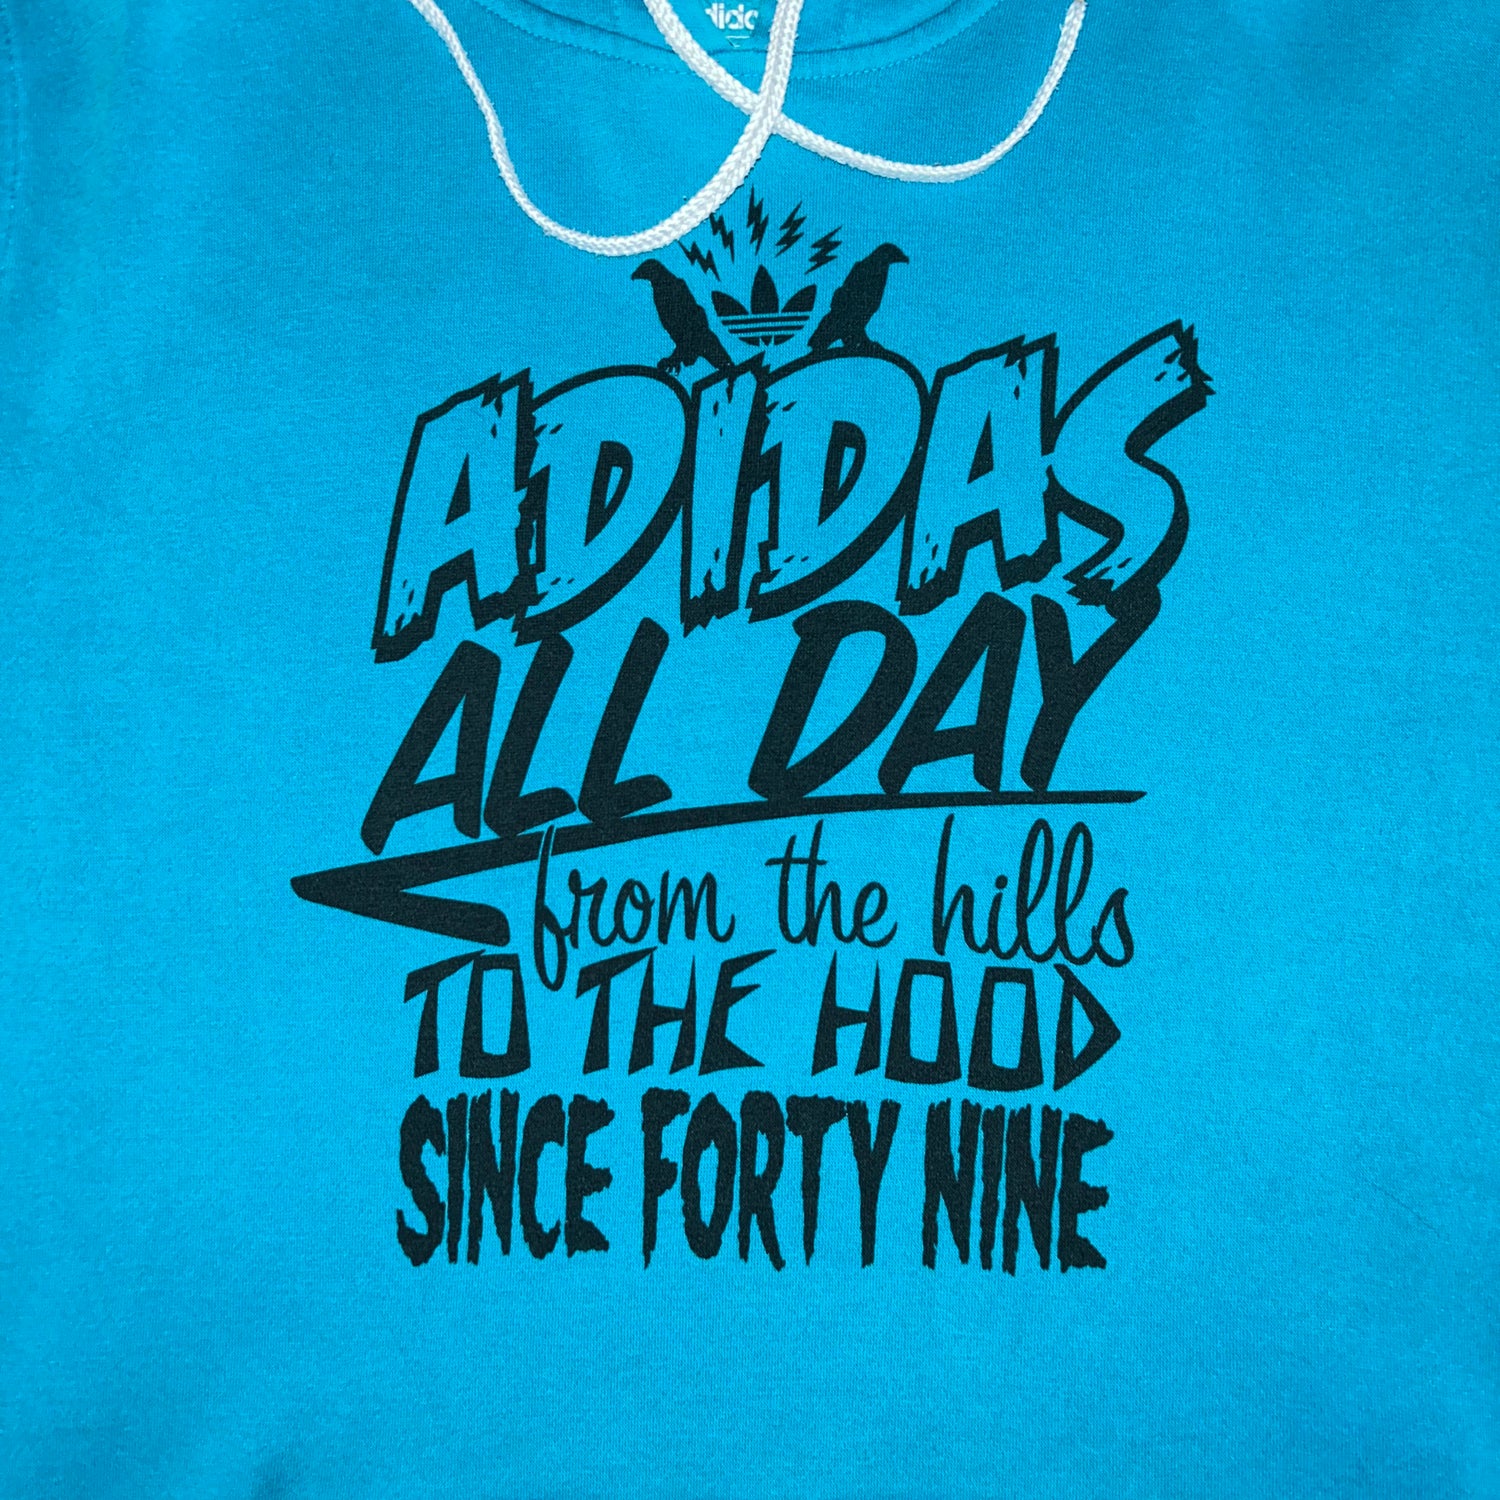 Adidas Sweatshirt (L)